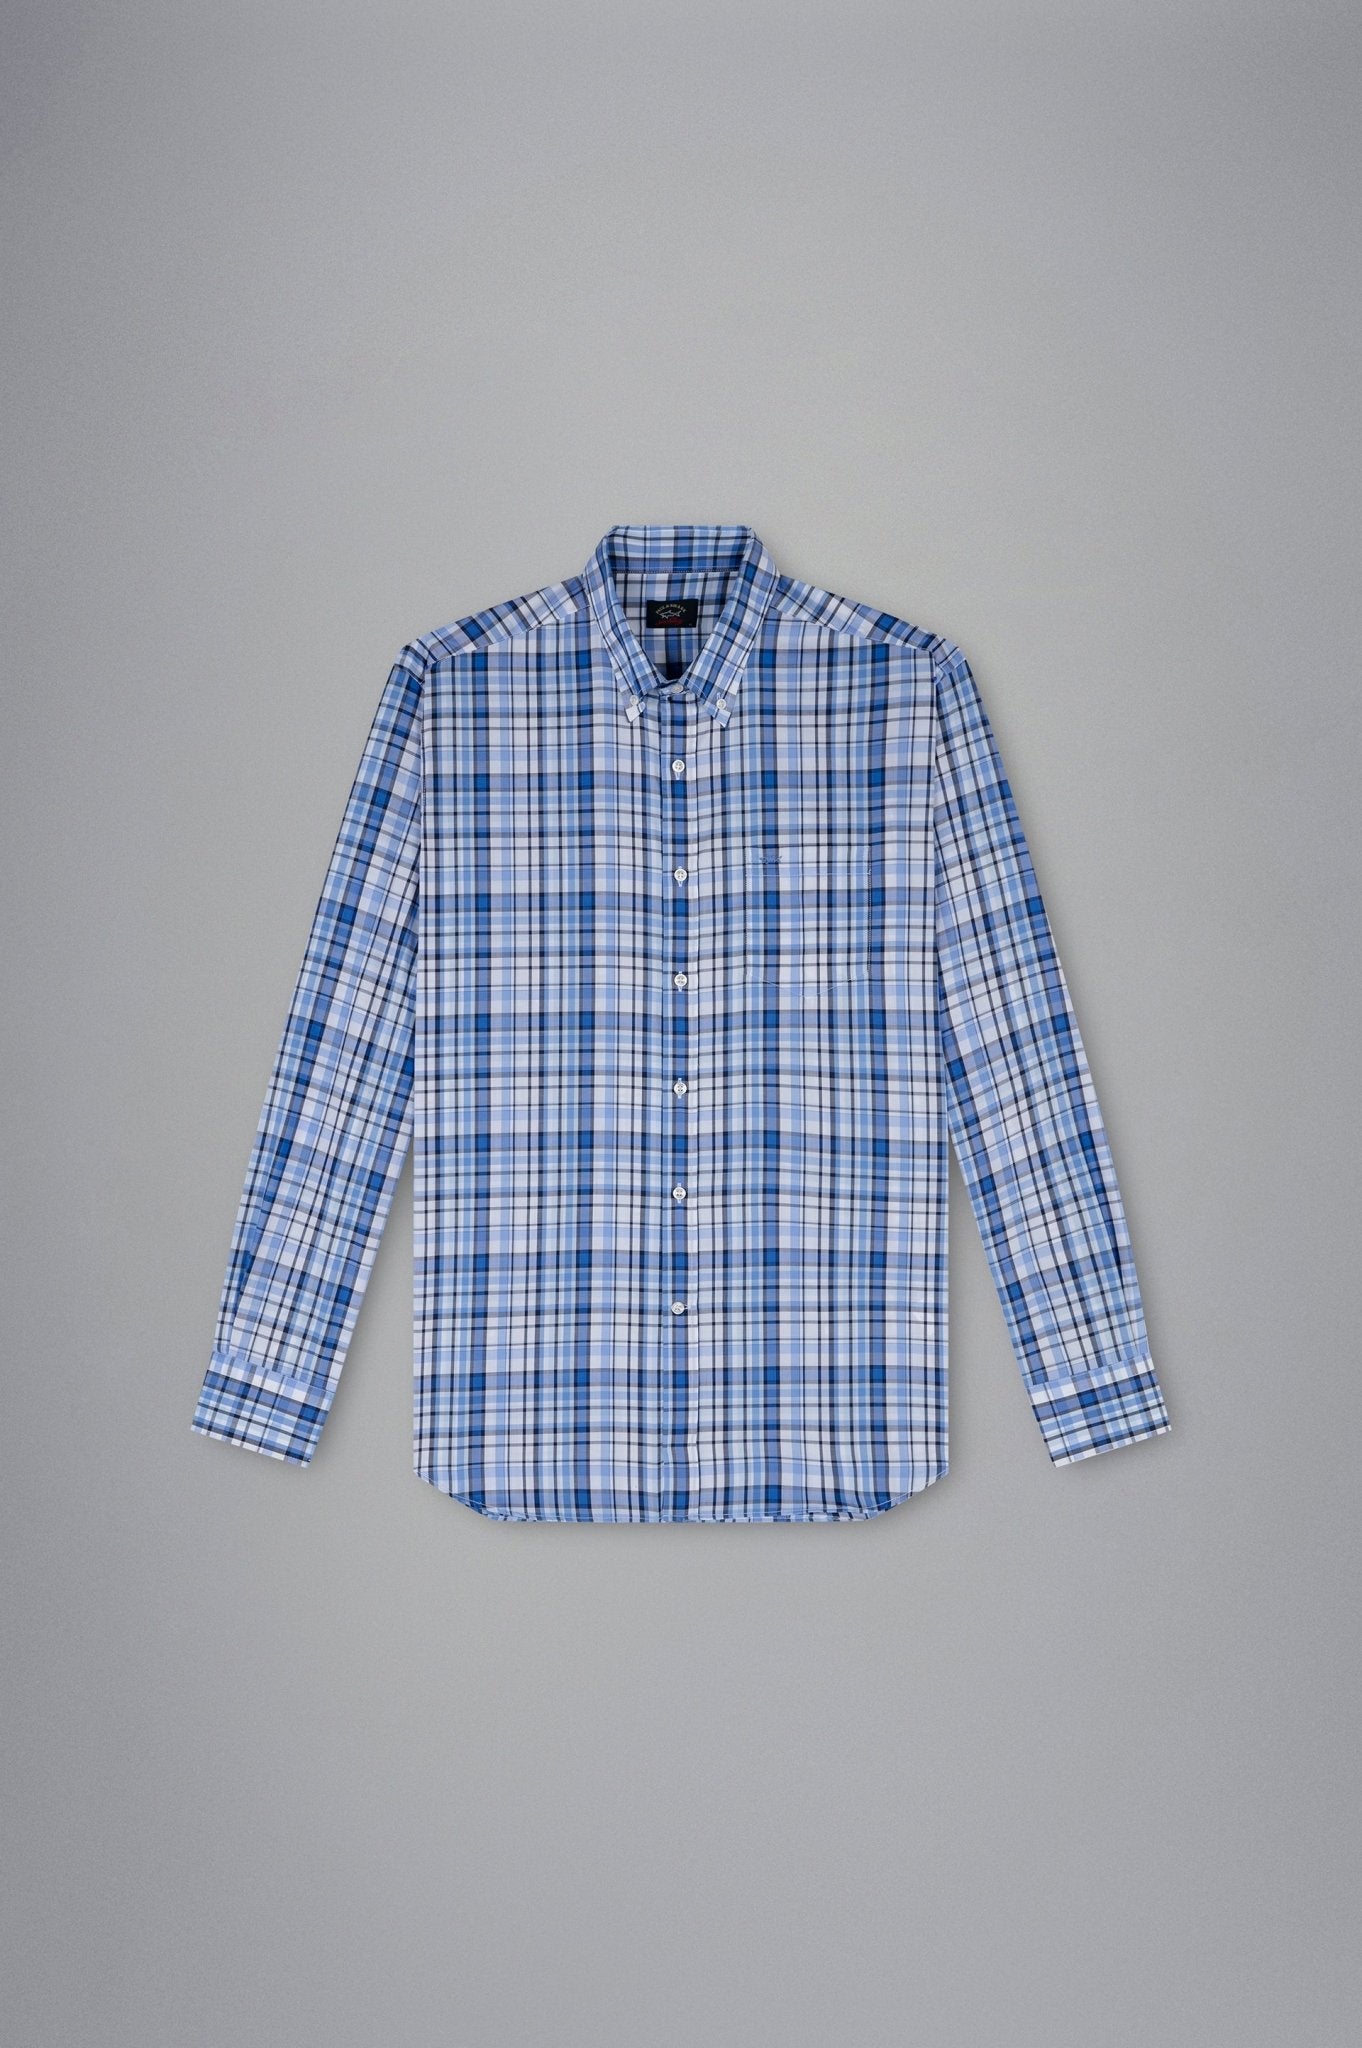 PAUL&SHARK X Long Sleeve Twill Check Shirt WHITE/BLUE - Henry BucksShirts38AW240047 - WHTBLU - 40